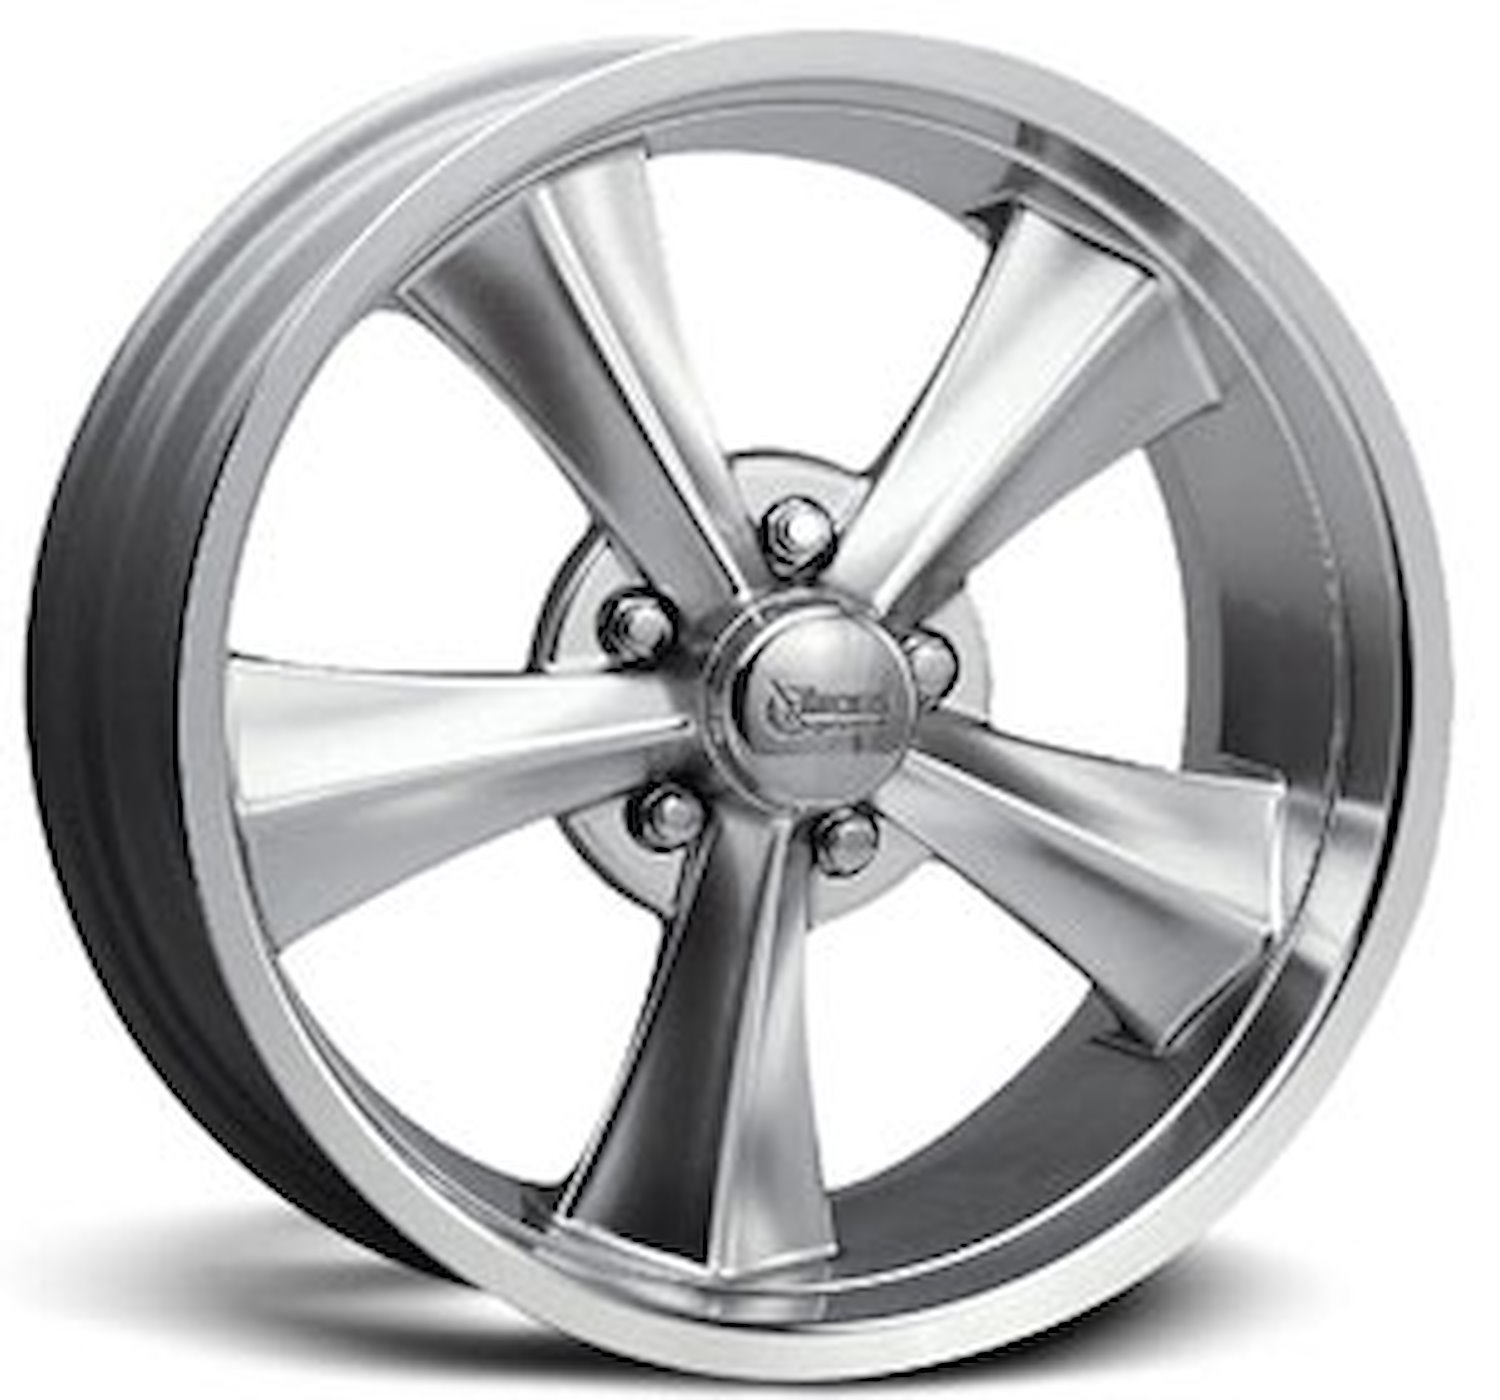 Booster Wheel - Hyper Silver Size: 18" x 7"